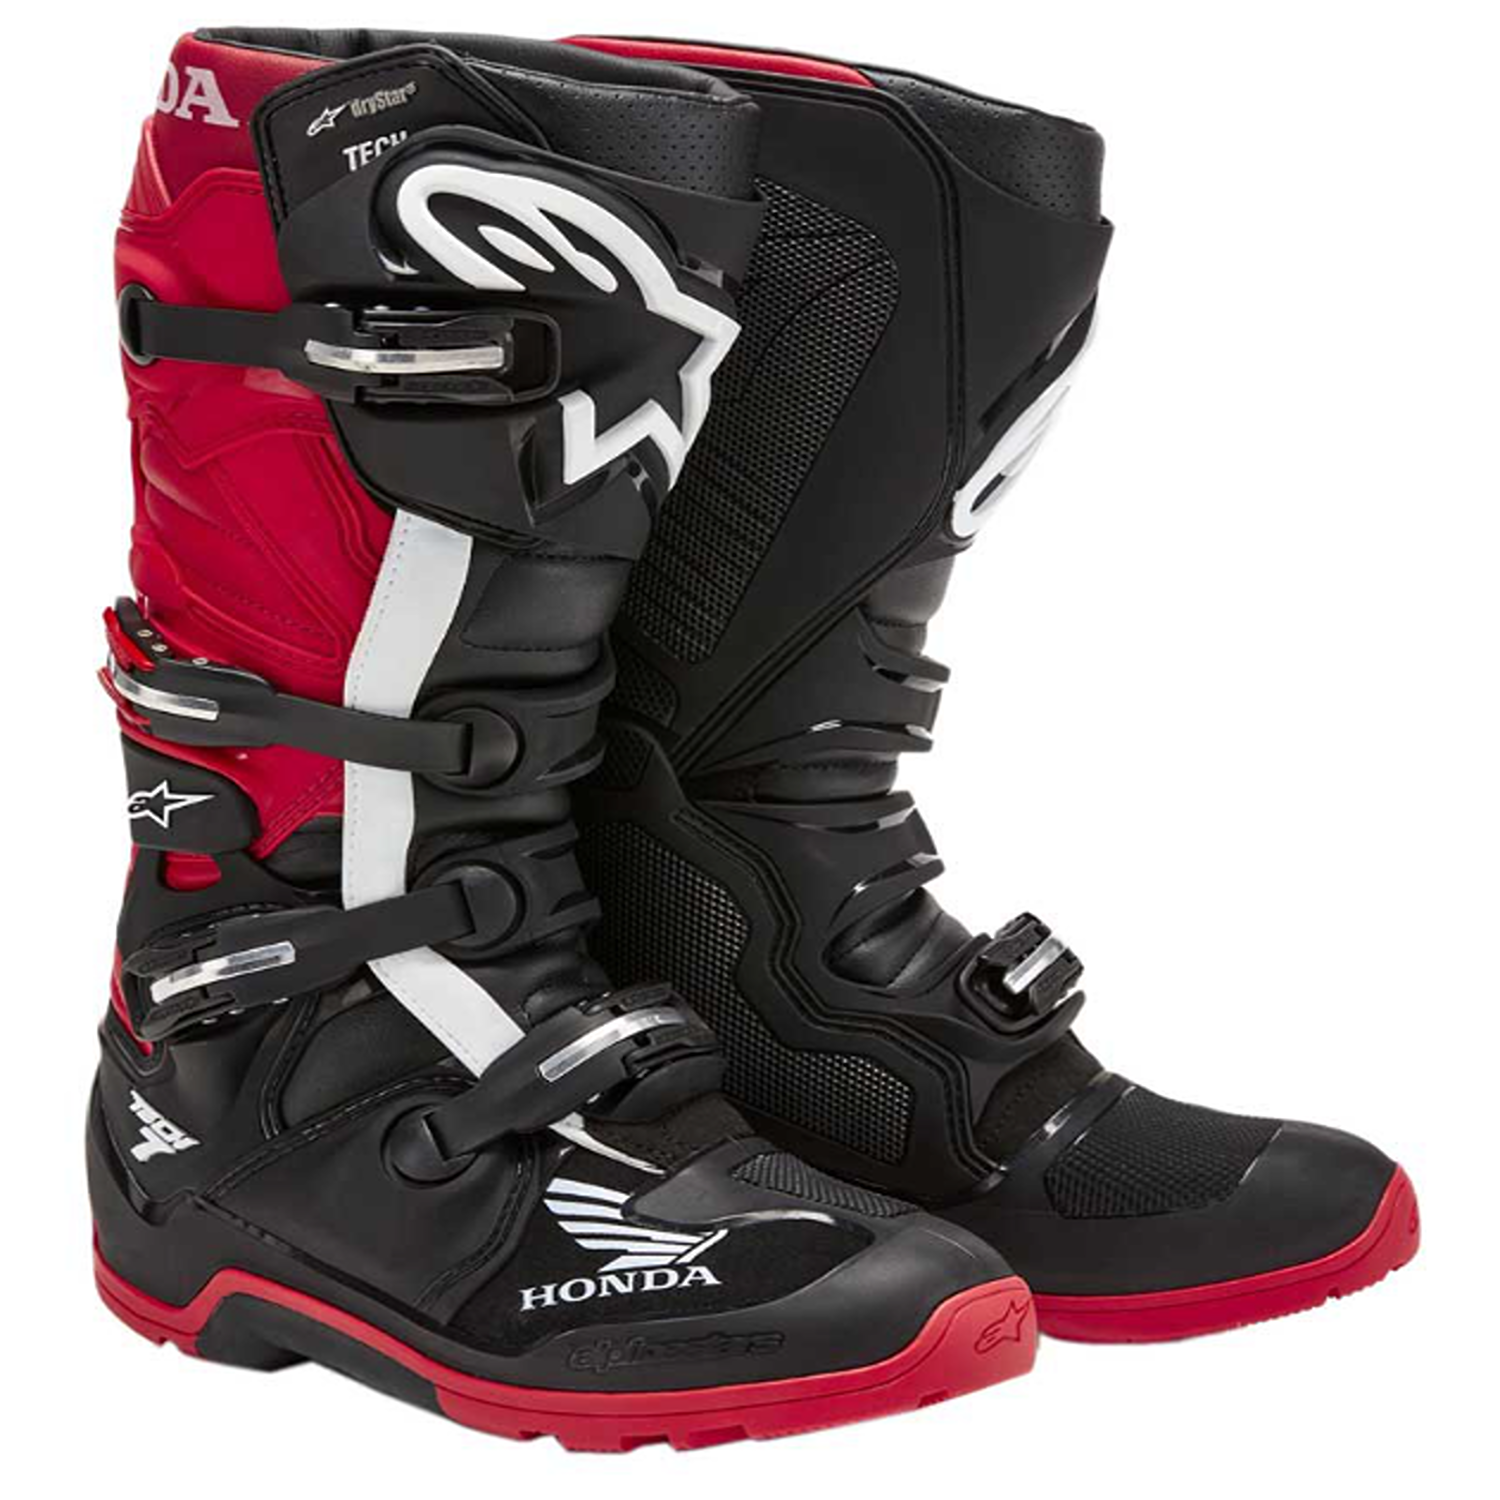 Image of Alpinestars Honda Tech 7 Enduro Drystar Boots Black Bright Red Size US 11 ID 8059347155531